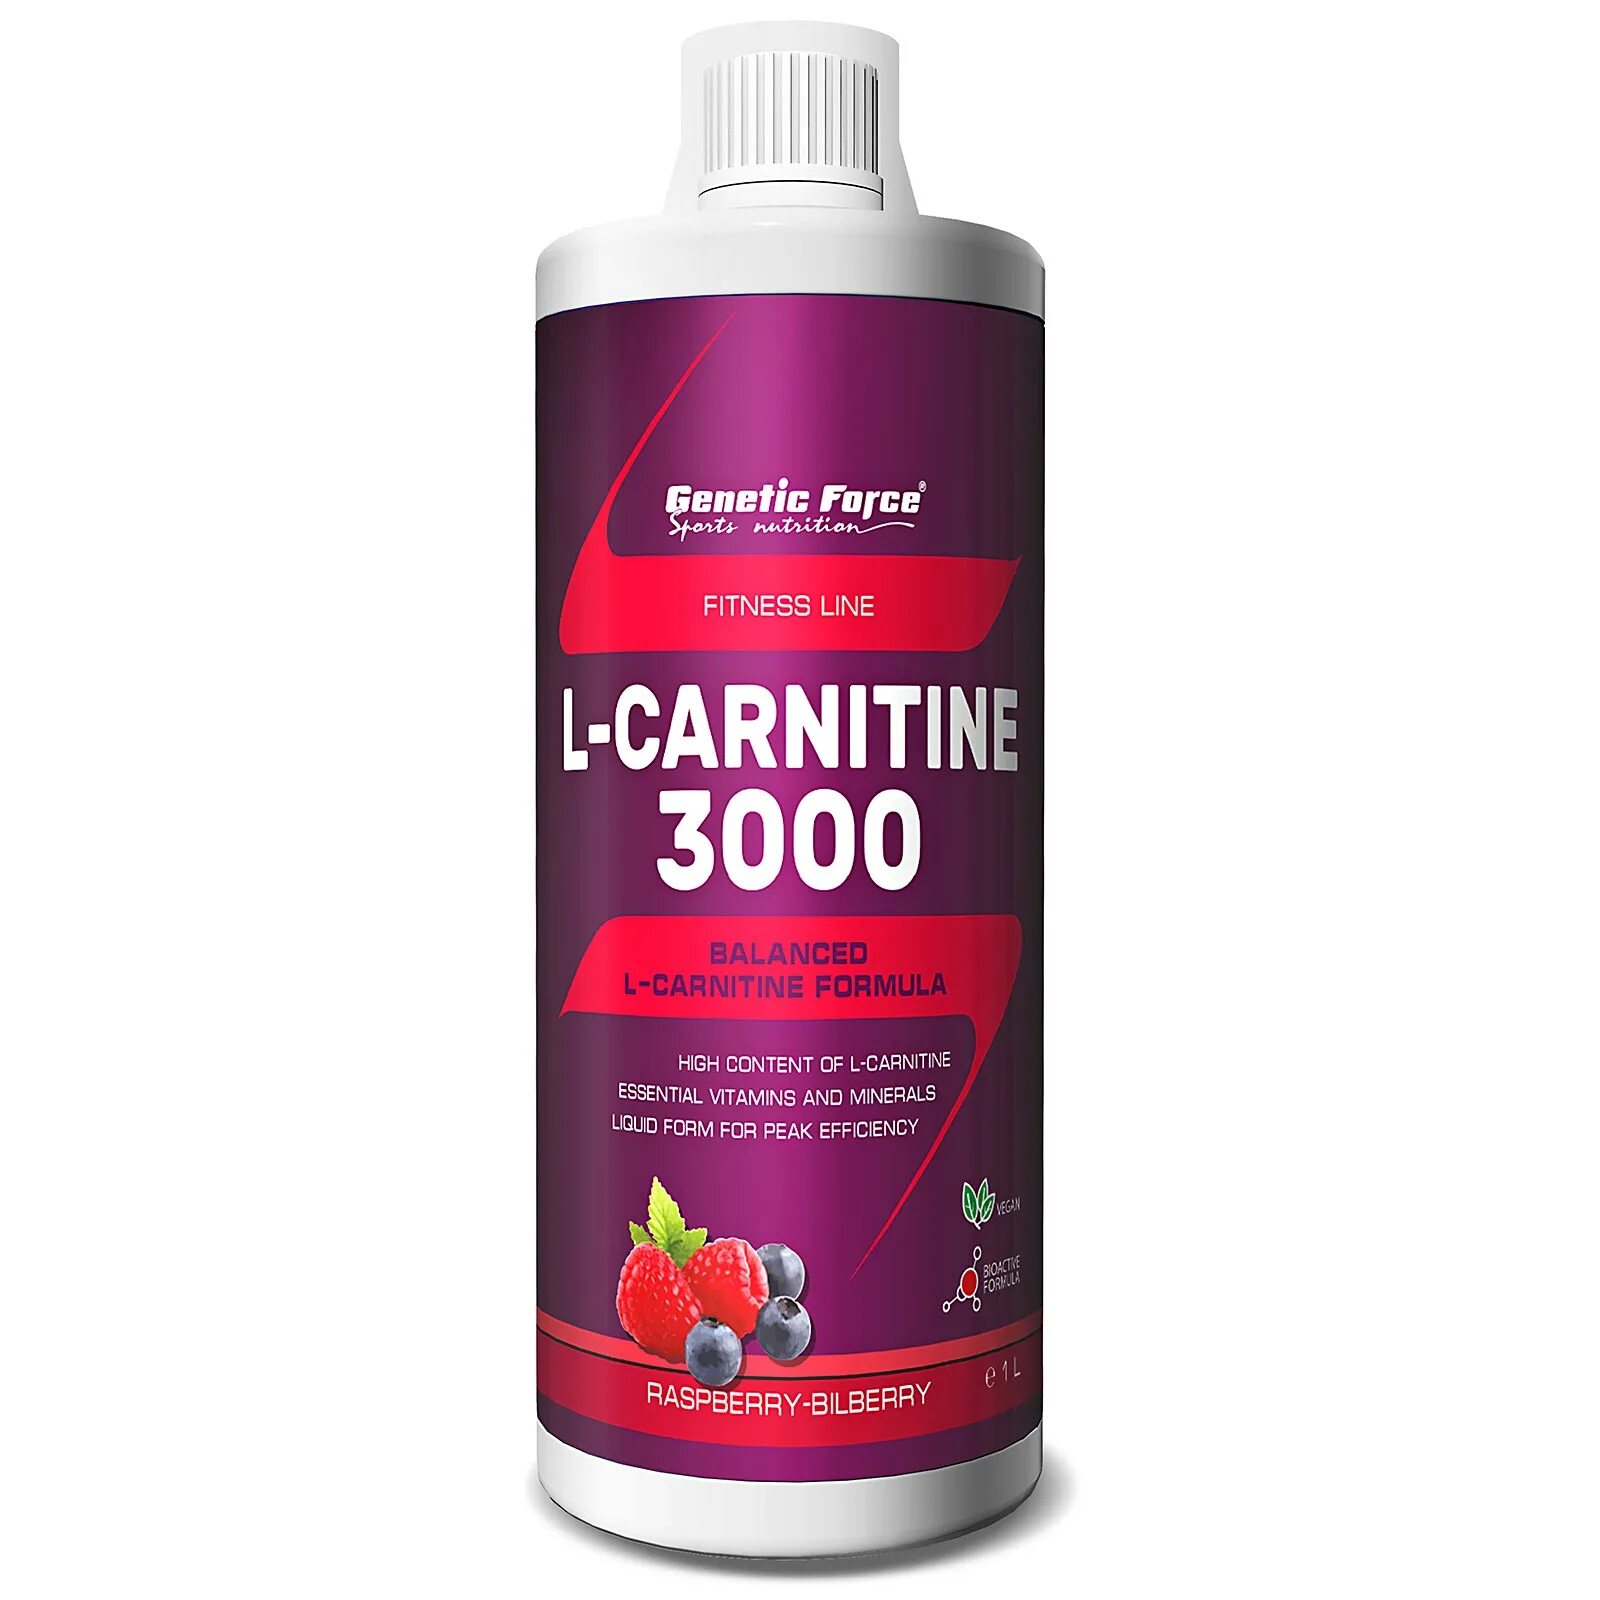 Л карнитин жидкий купить. L Carnitine genetic Force 3600. L-Carnitin 3000. RS Л карнитин 3000. VPLAB L-карнитин 3000 shot.